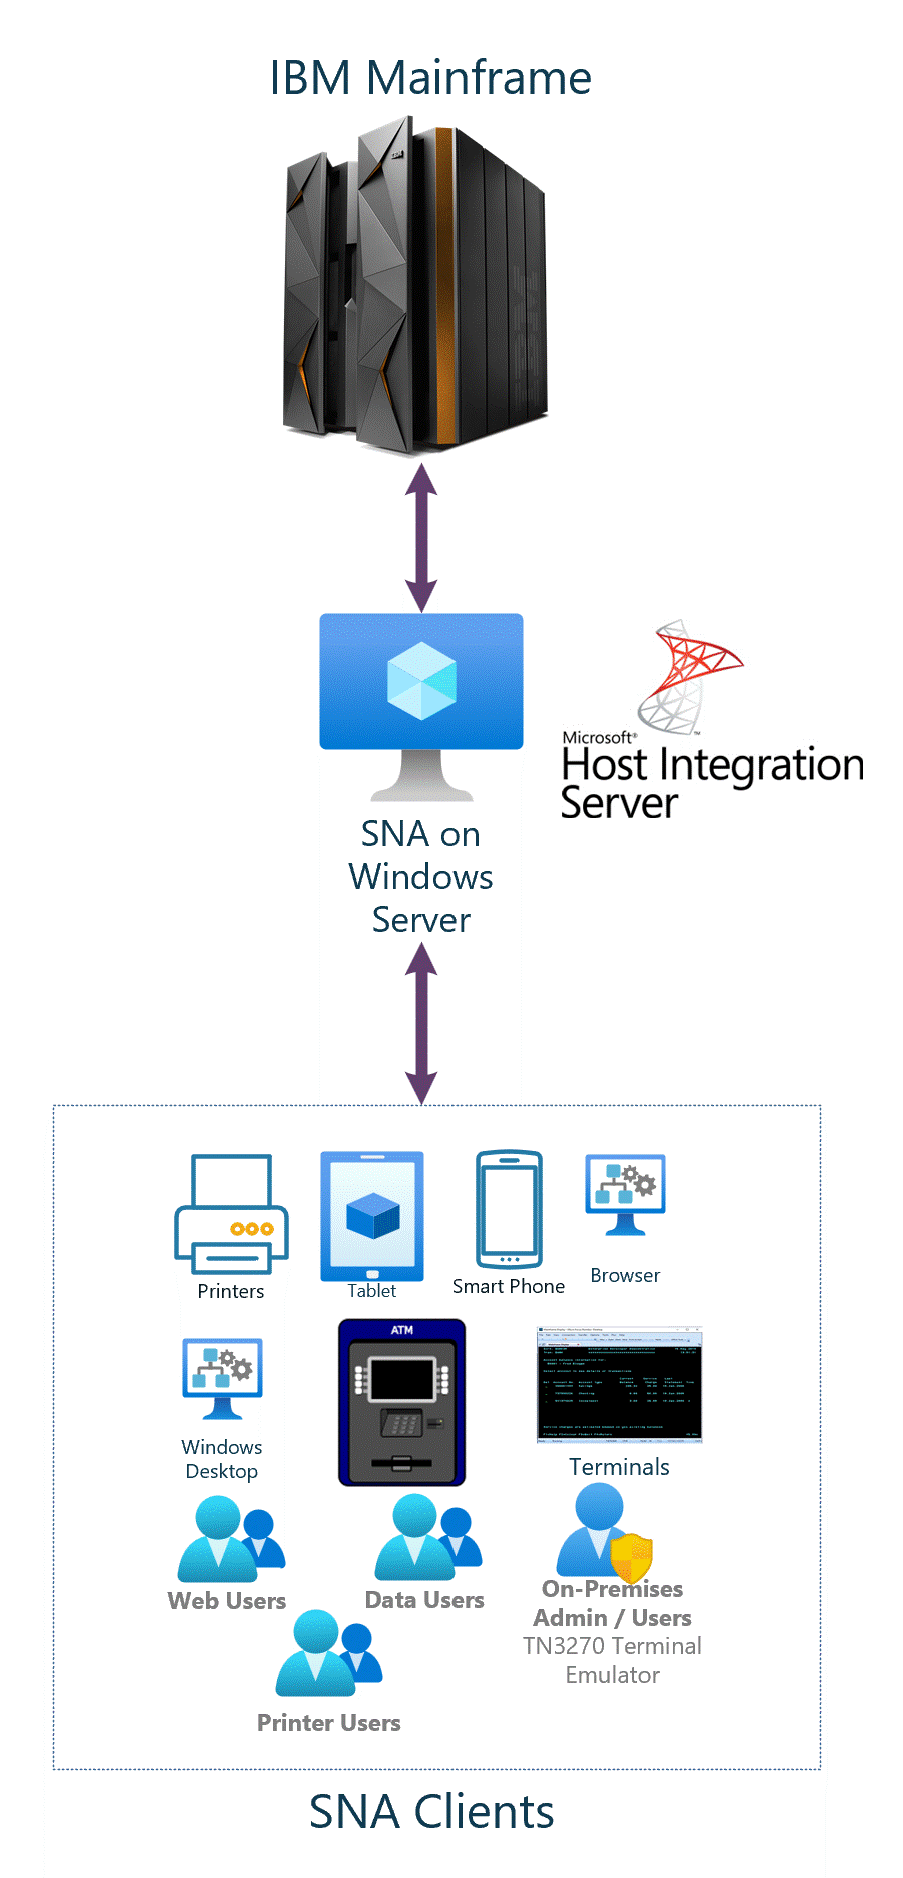 IBM メインフレームに接続している Host Integration Server ネットワークを示す図。